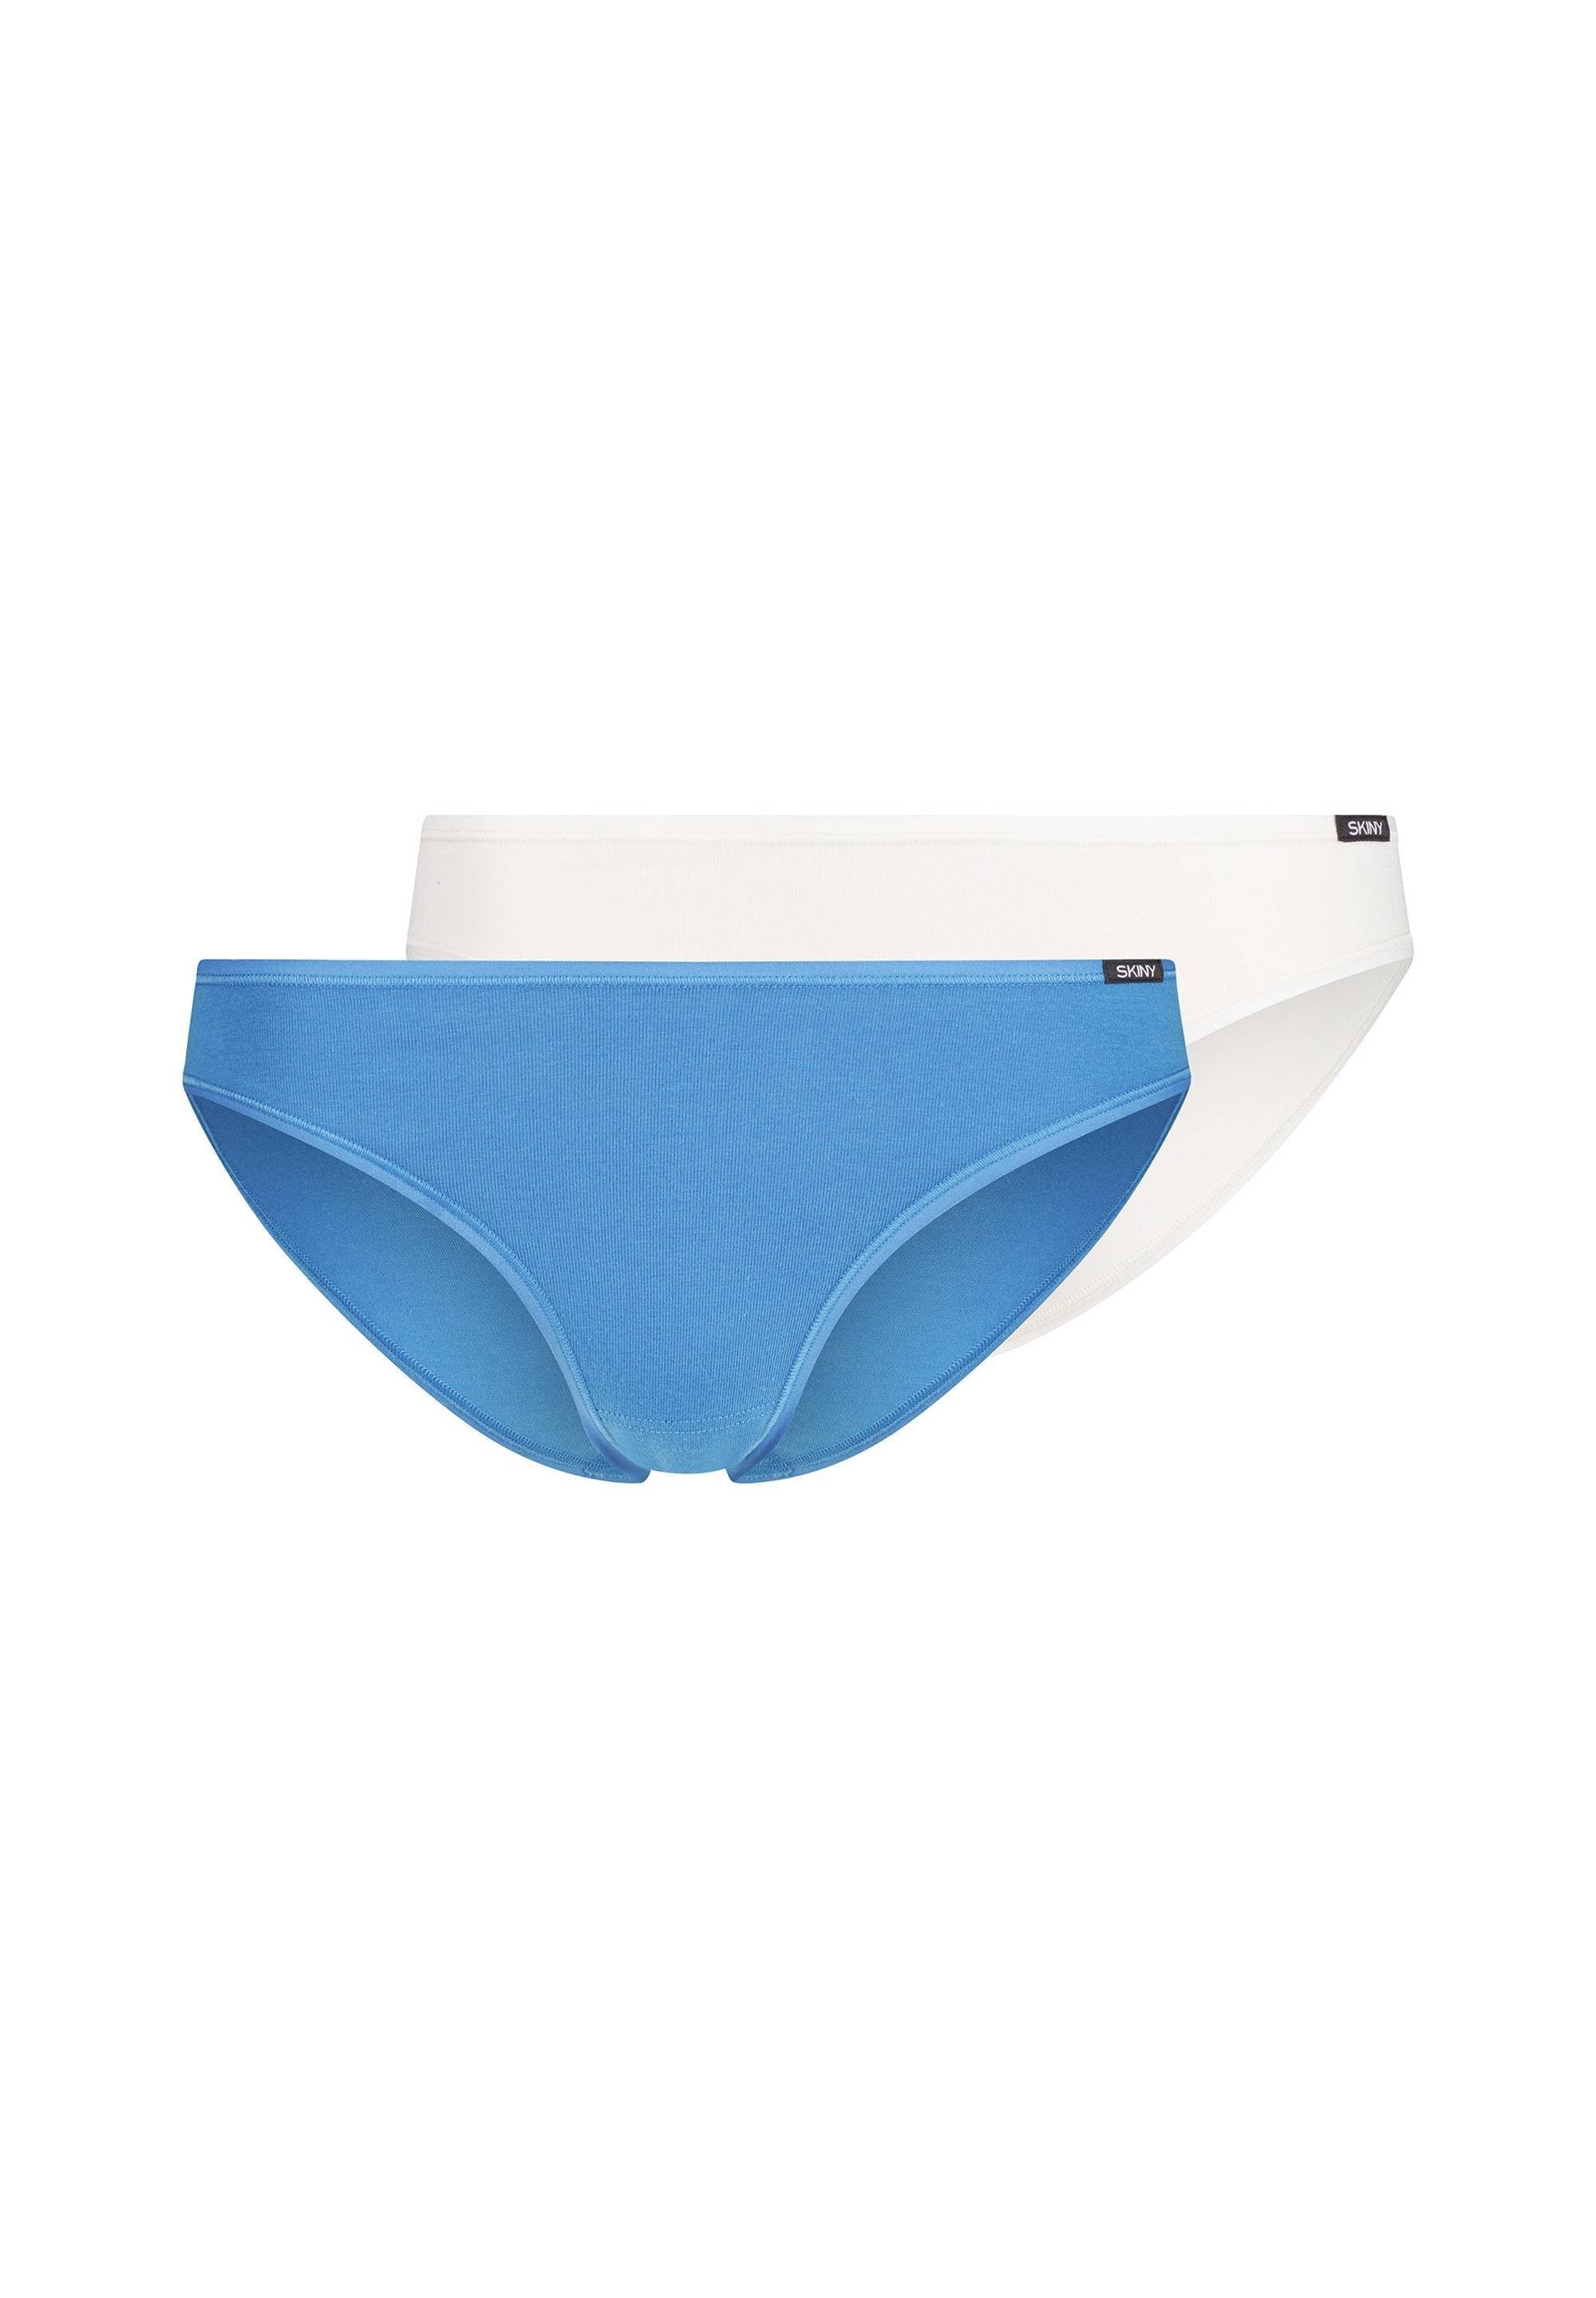 Rio - Hellblau/Weiß Bikini Slip Damen 2er Pack Cotton Slip, Slip, Skiny